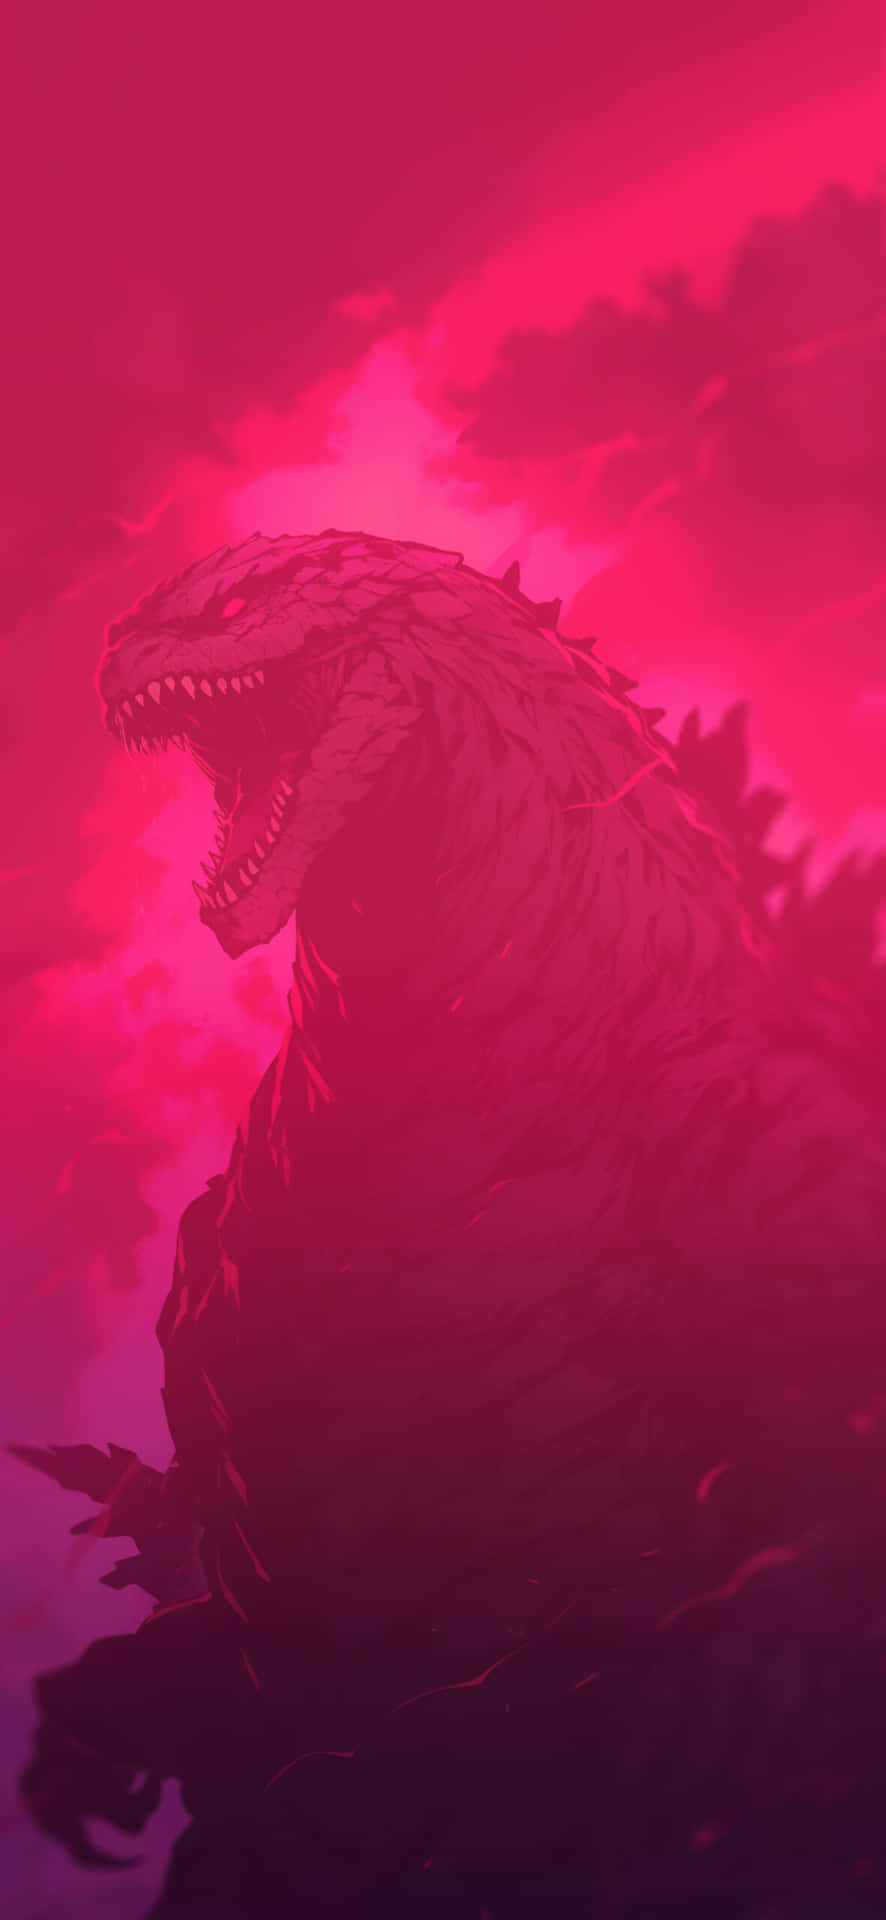 Godzilla Silhouette Pink Backdrop Wallpaper